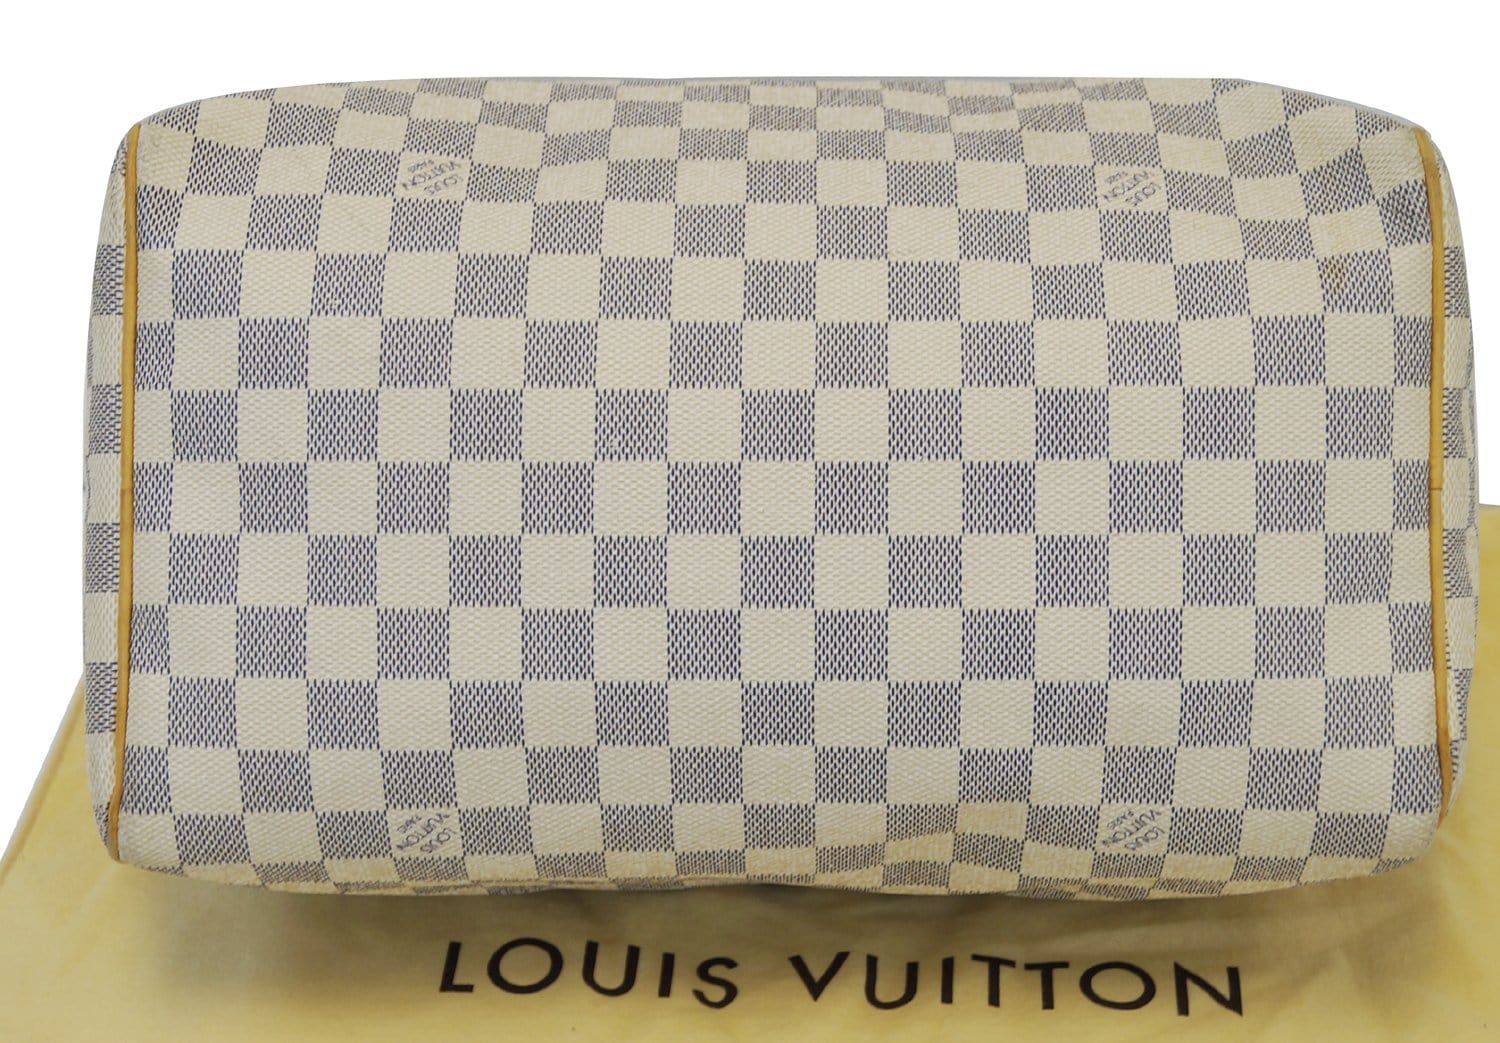 Louis Vuitton Speedy B25 Damier Azur VS. Speedy B30 World Tour